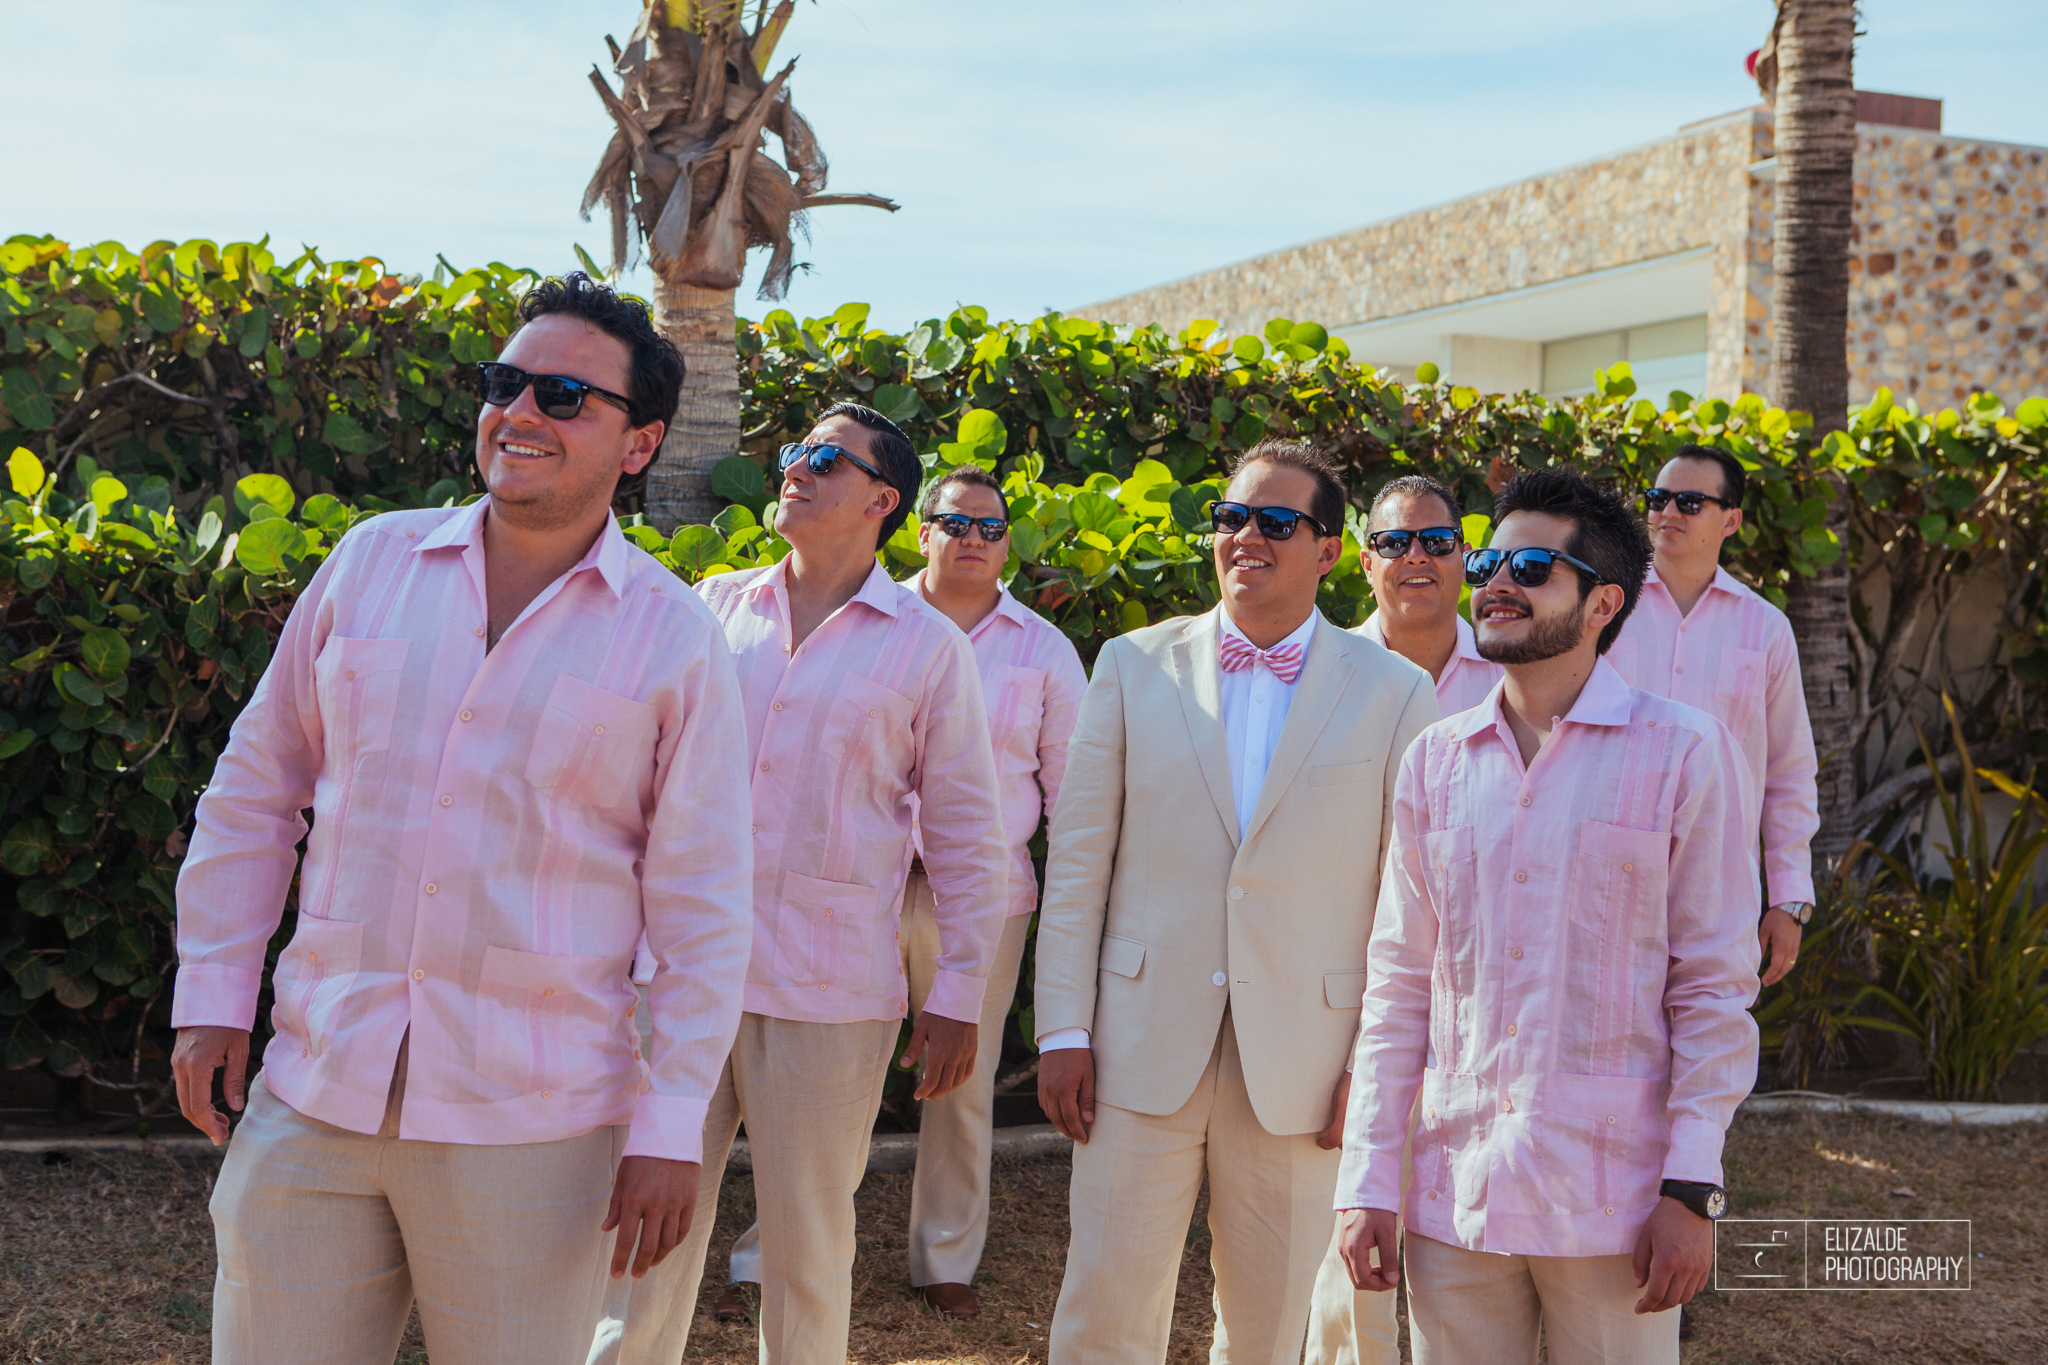 Pay and Ferran_Acapulco_Destination Wedding_Elizalde Photography-39.jpg